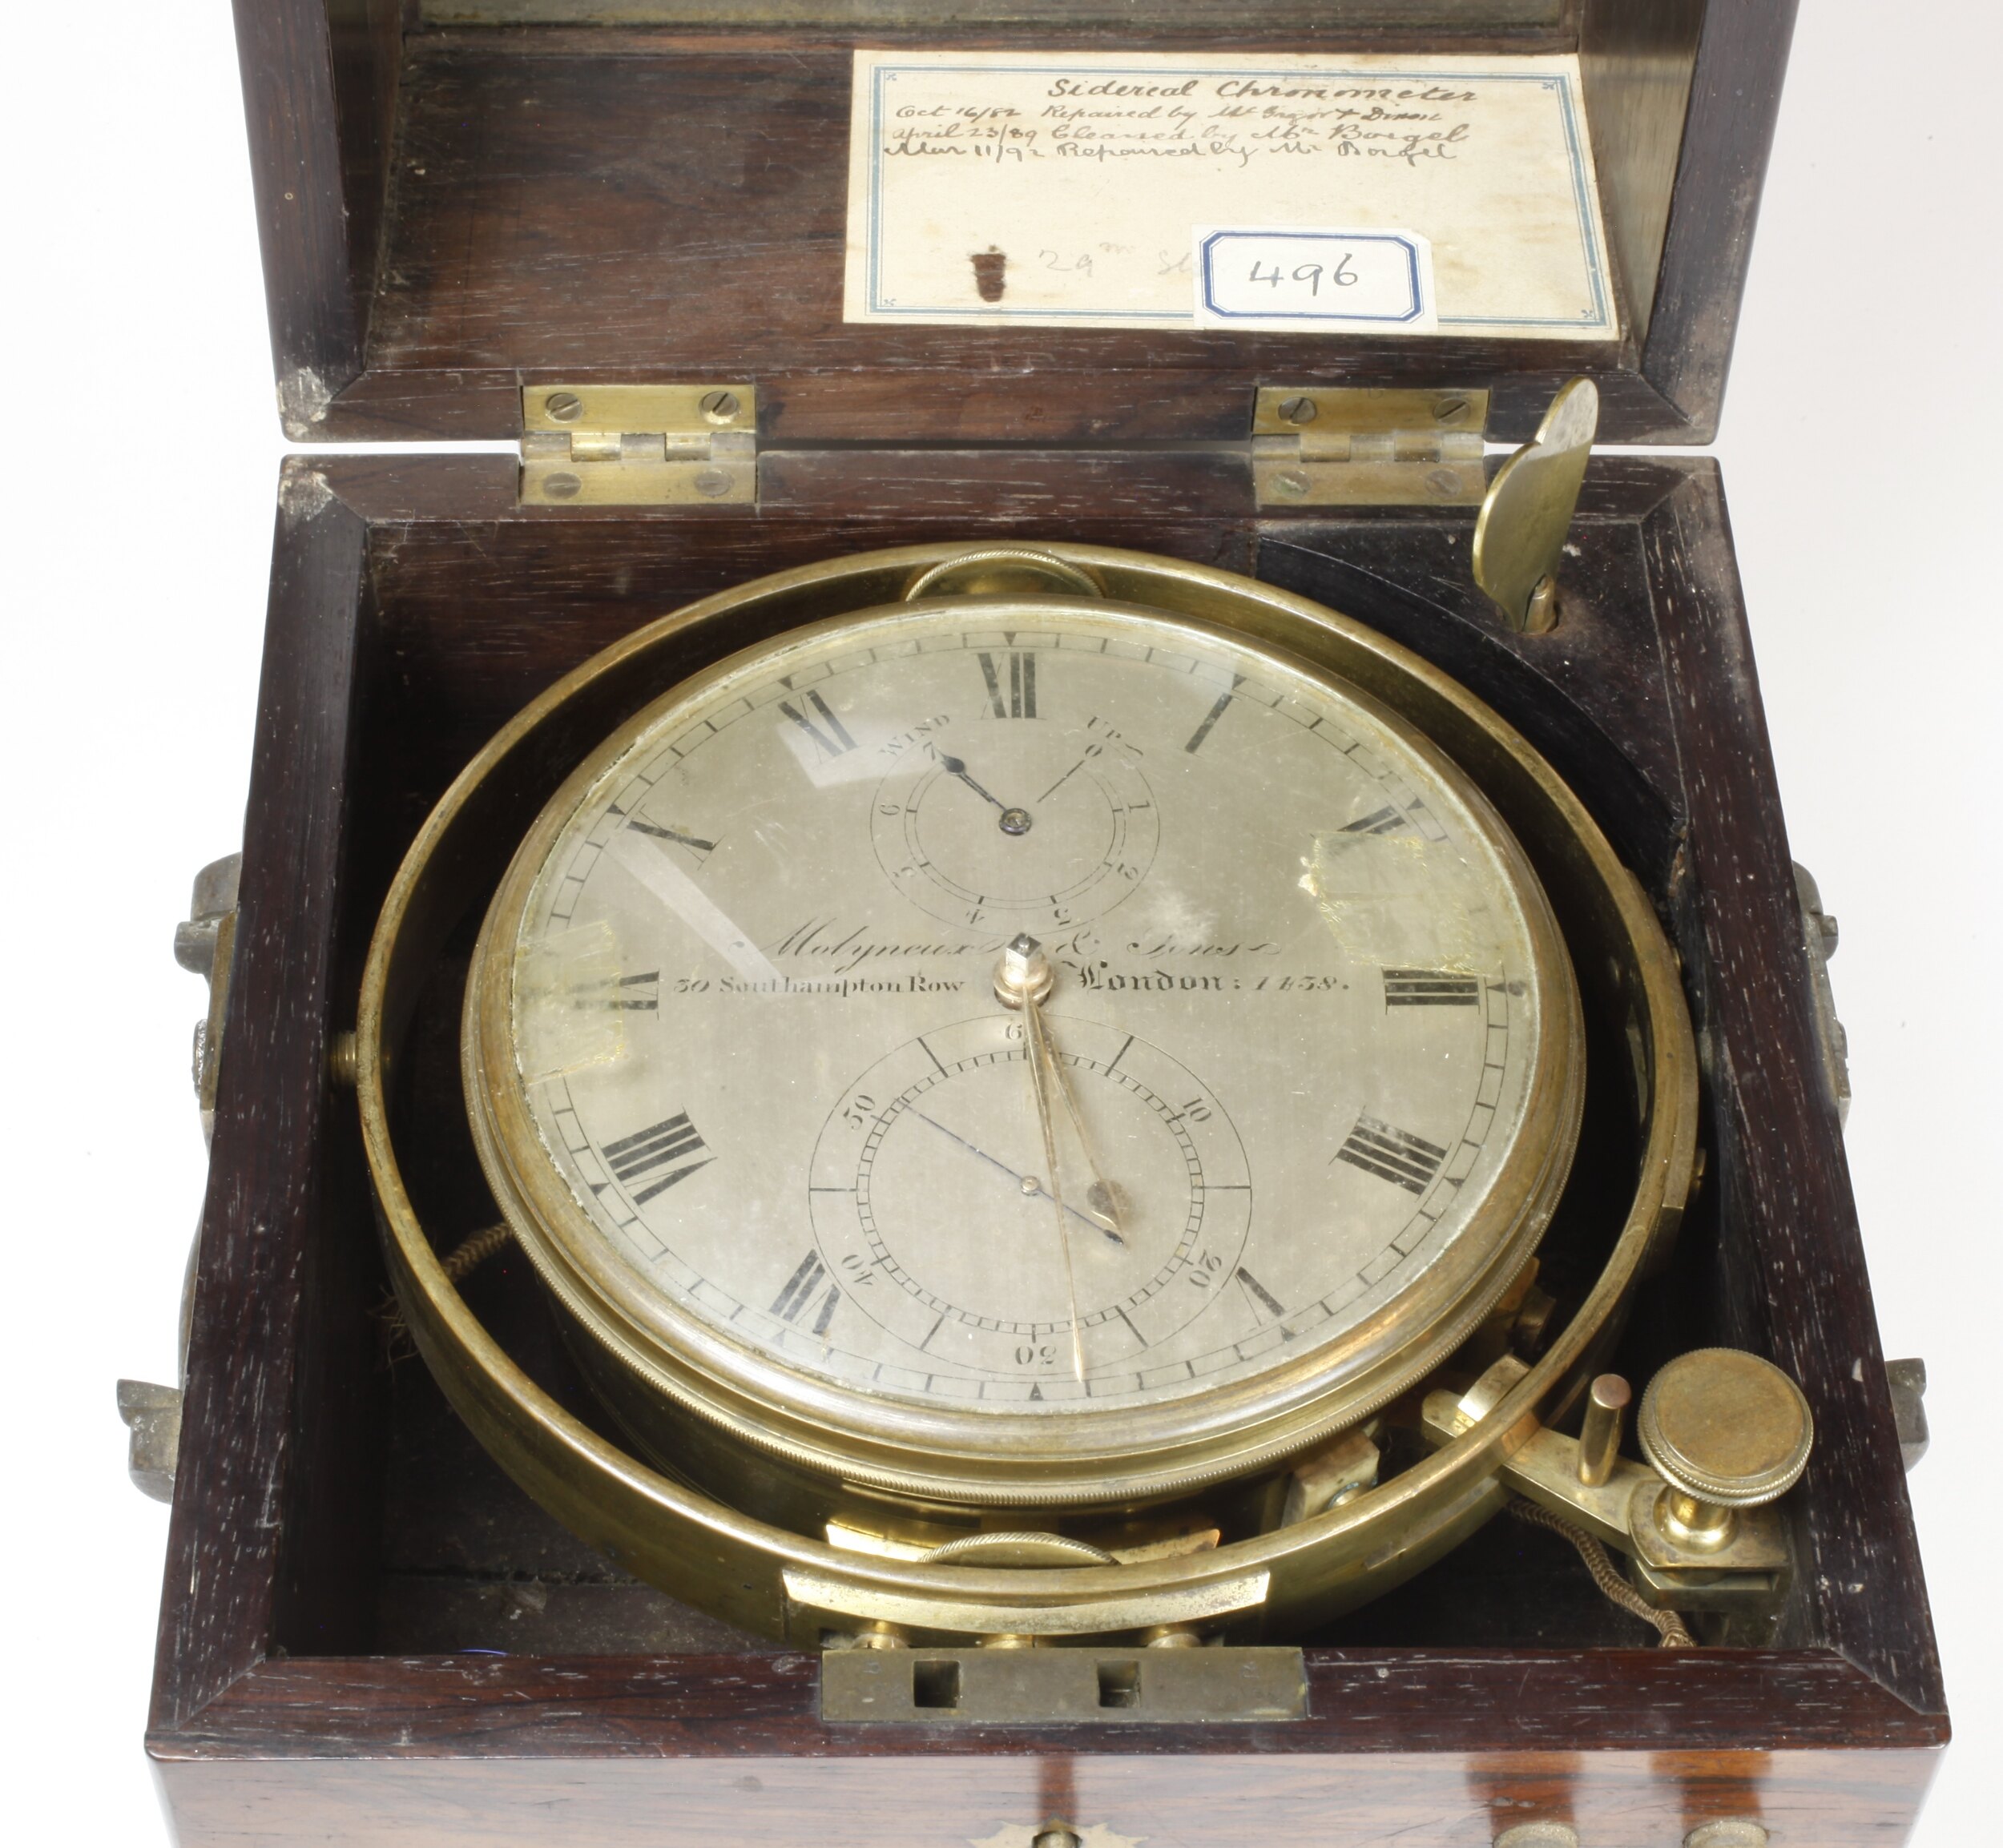 Marine Chronometer - No.1438, Molyneux & Sons, London, England